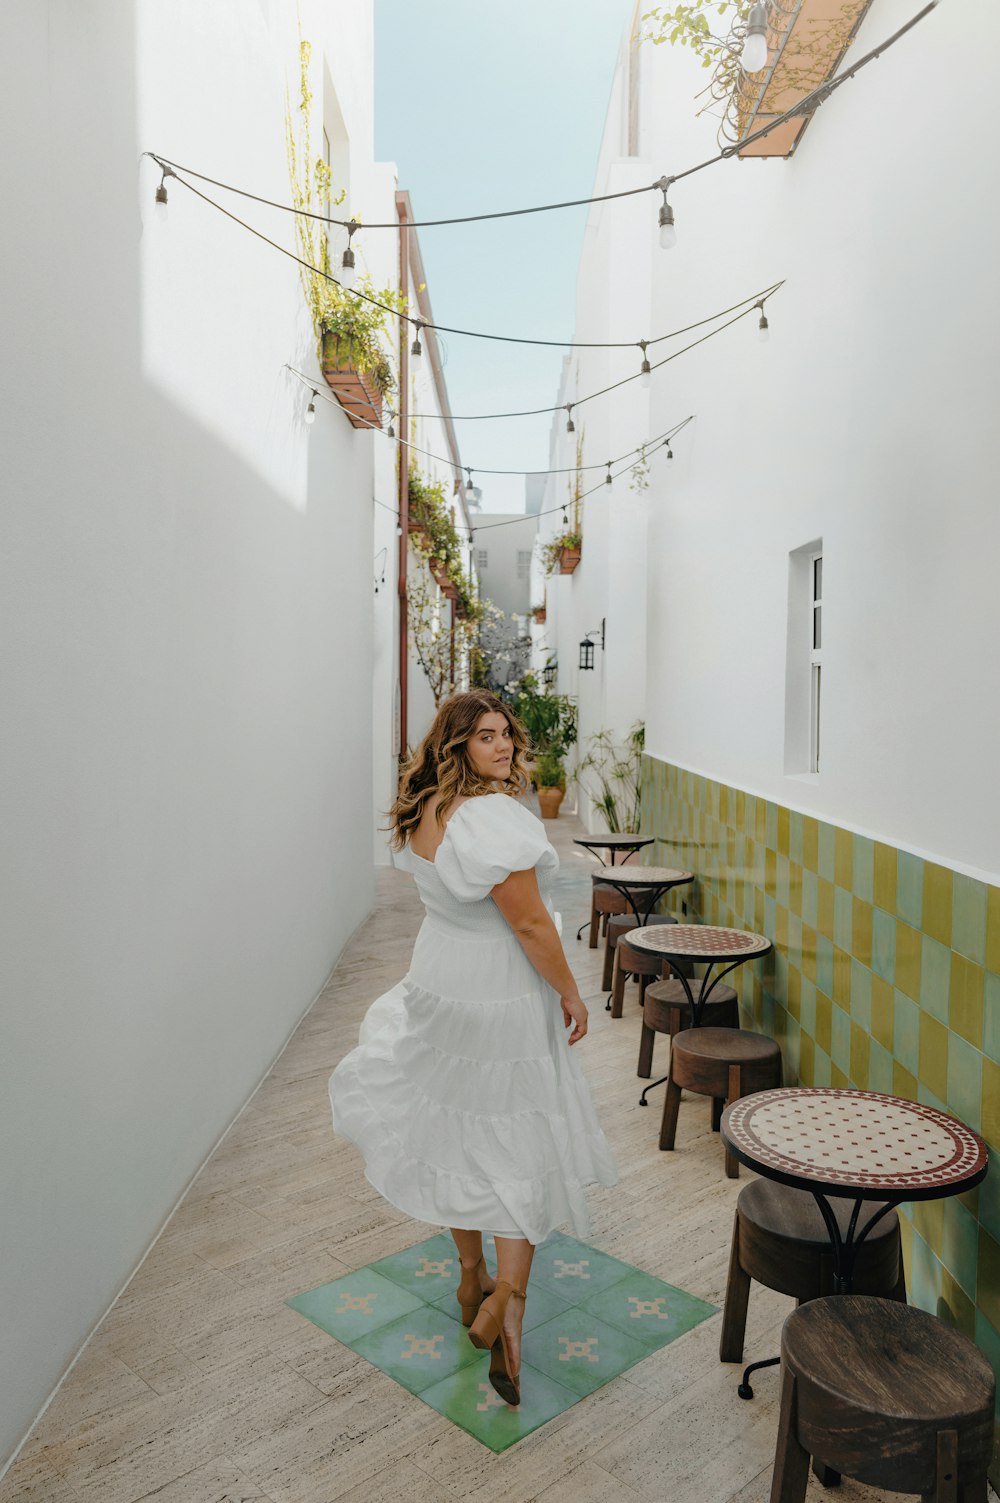 a woman in a white dress is walking down a narrow alleyway